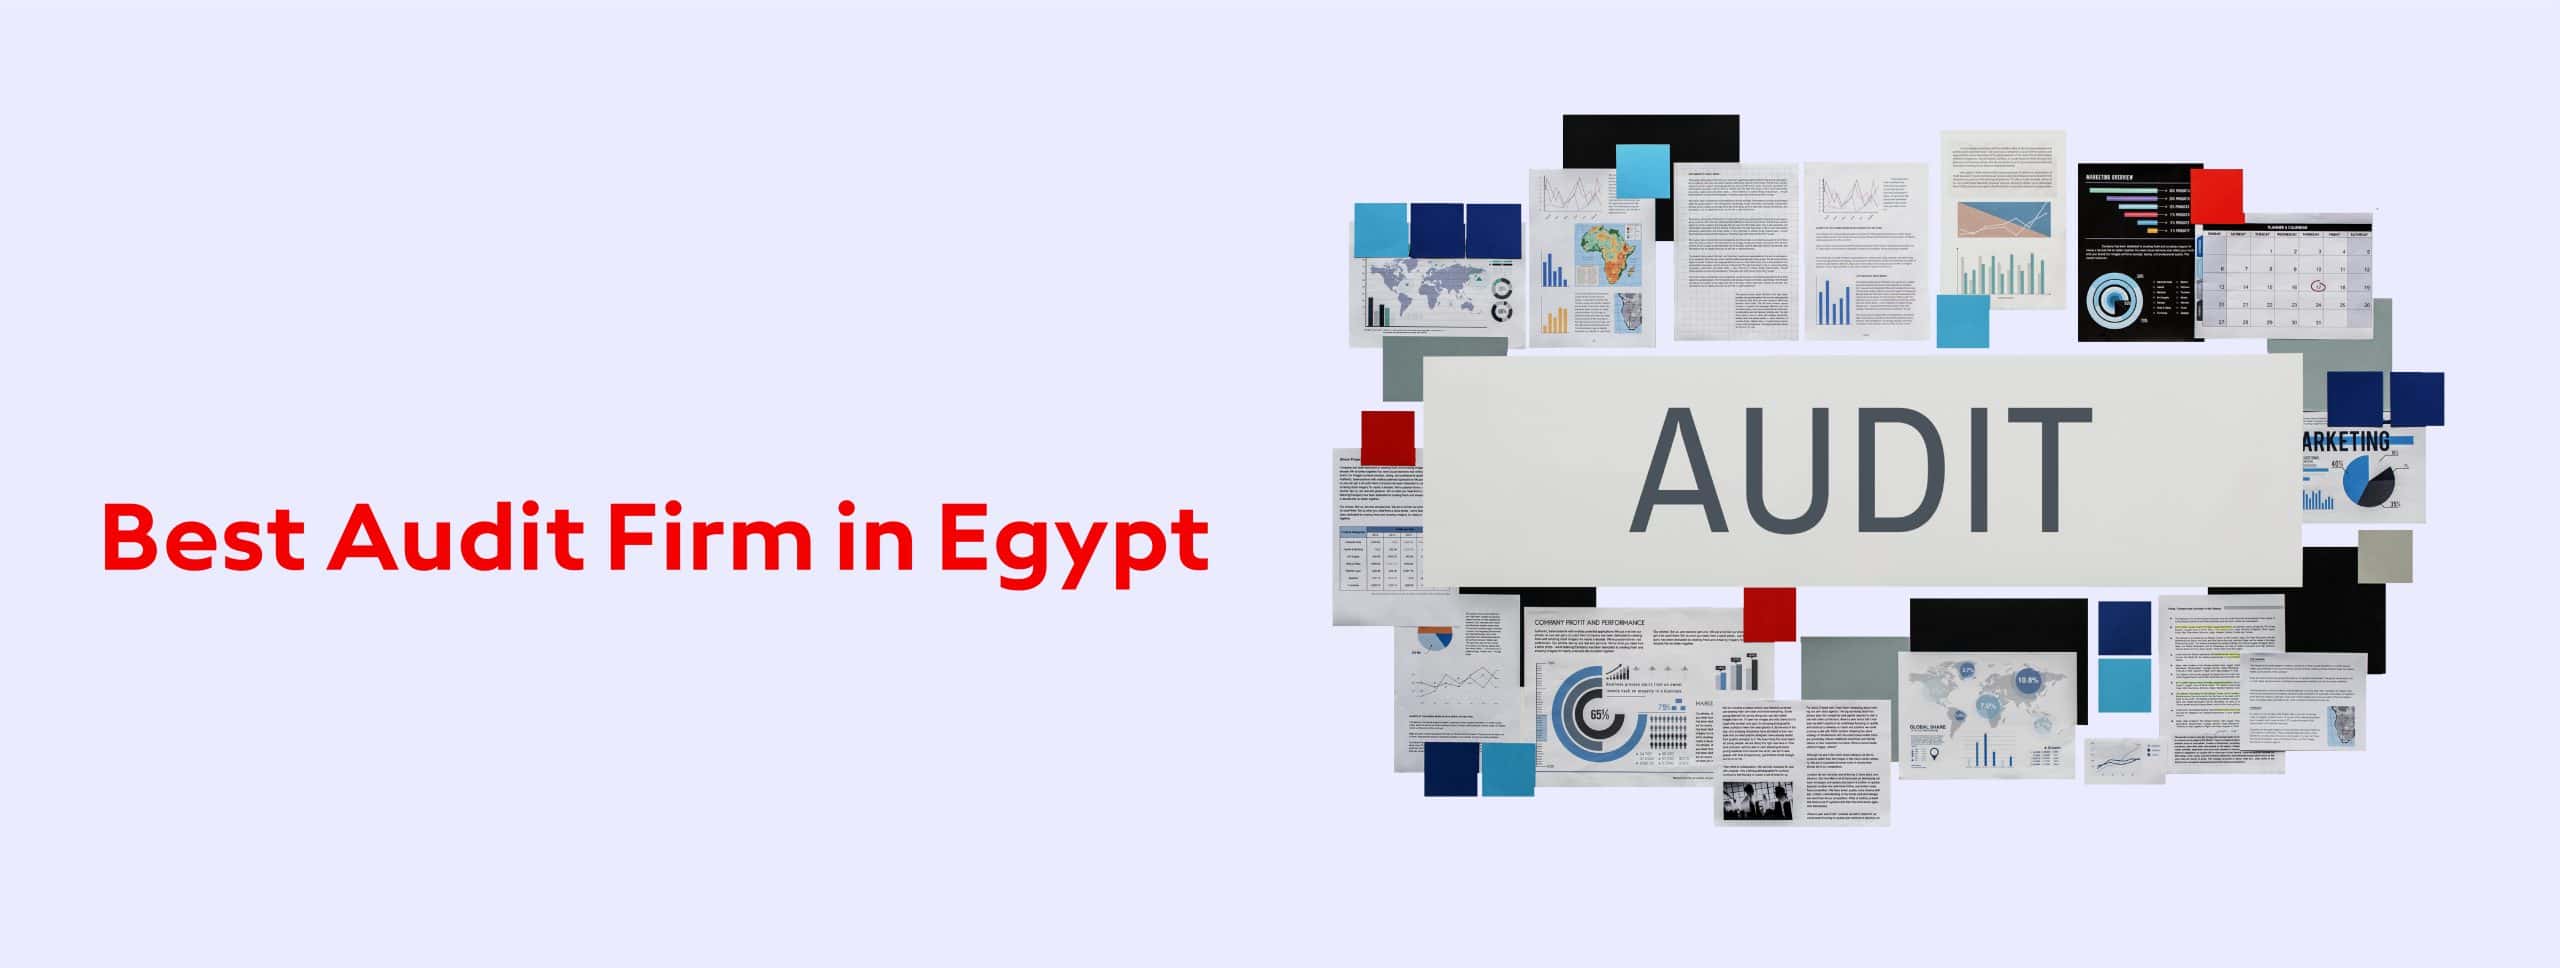 Best audit firm in Egypt